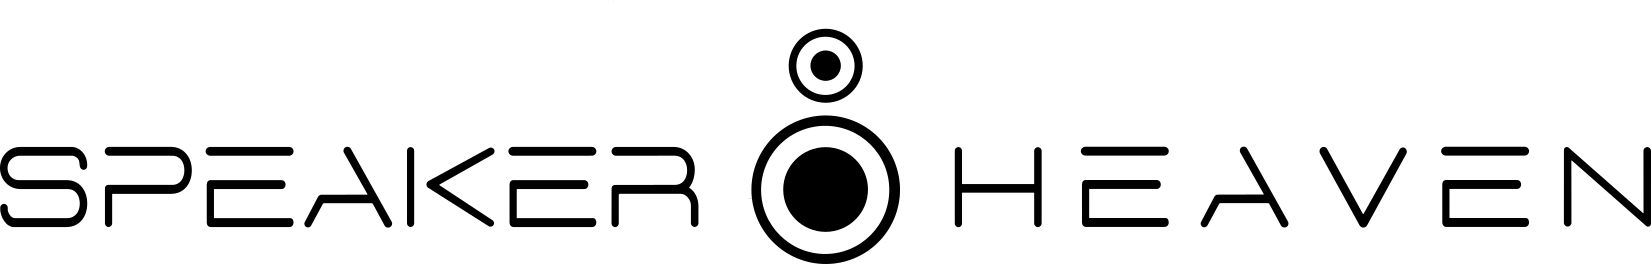 Speakerheavern Logo - dark version - Design by InitBox UG